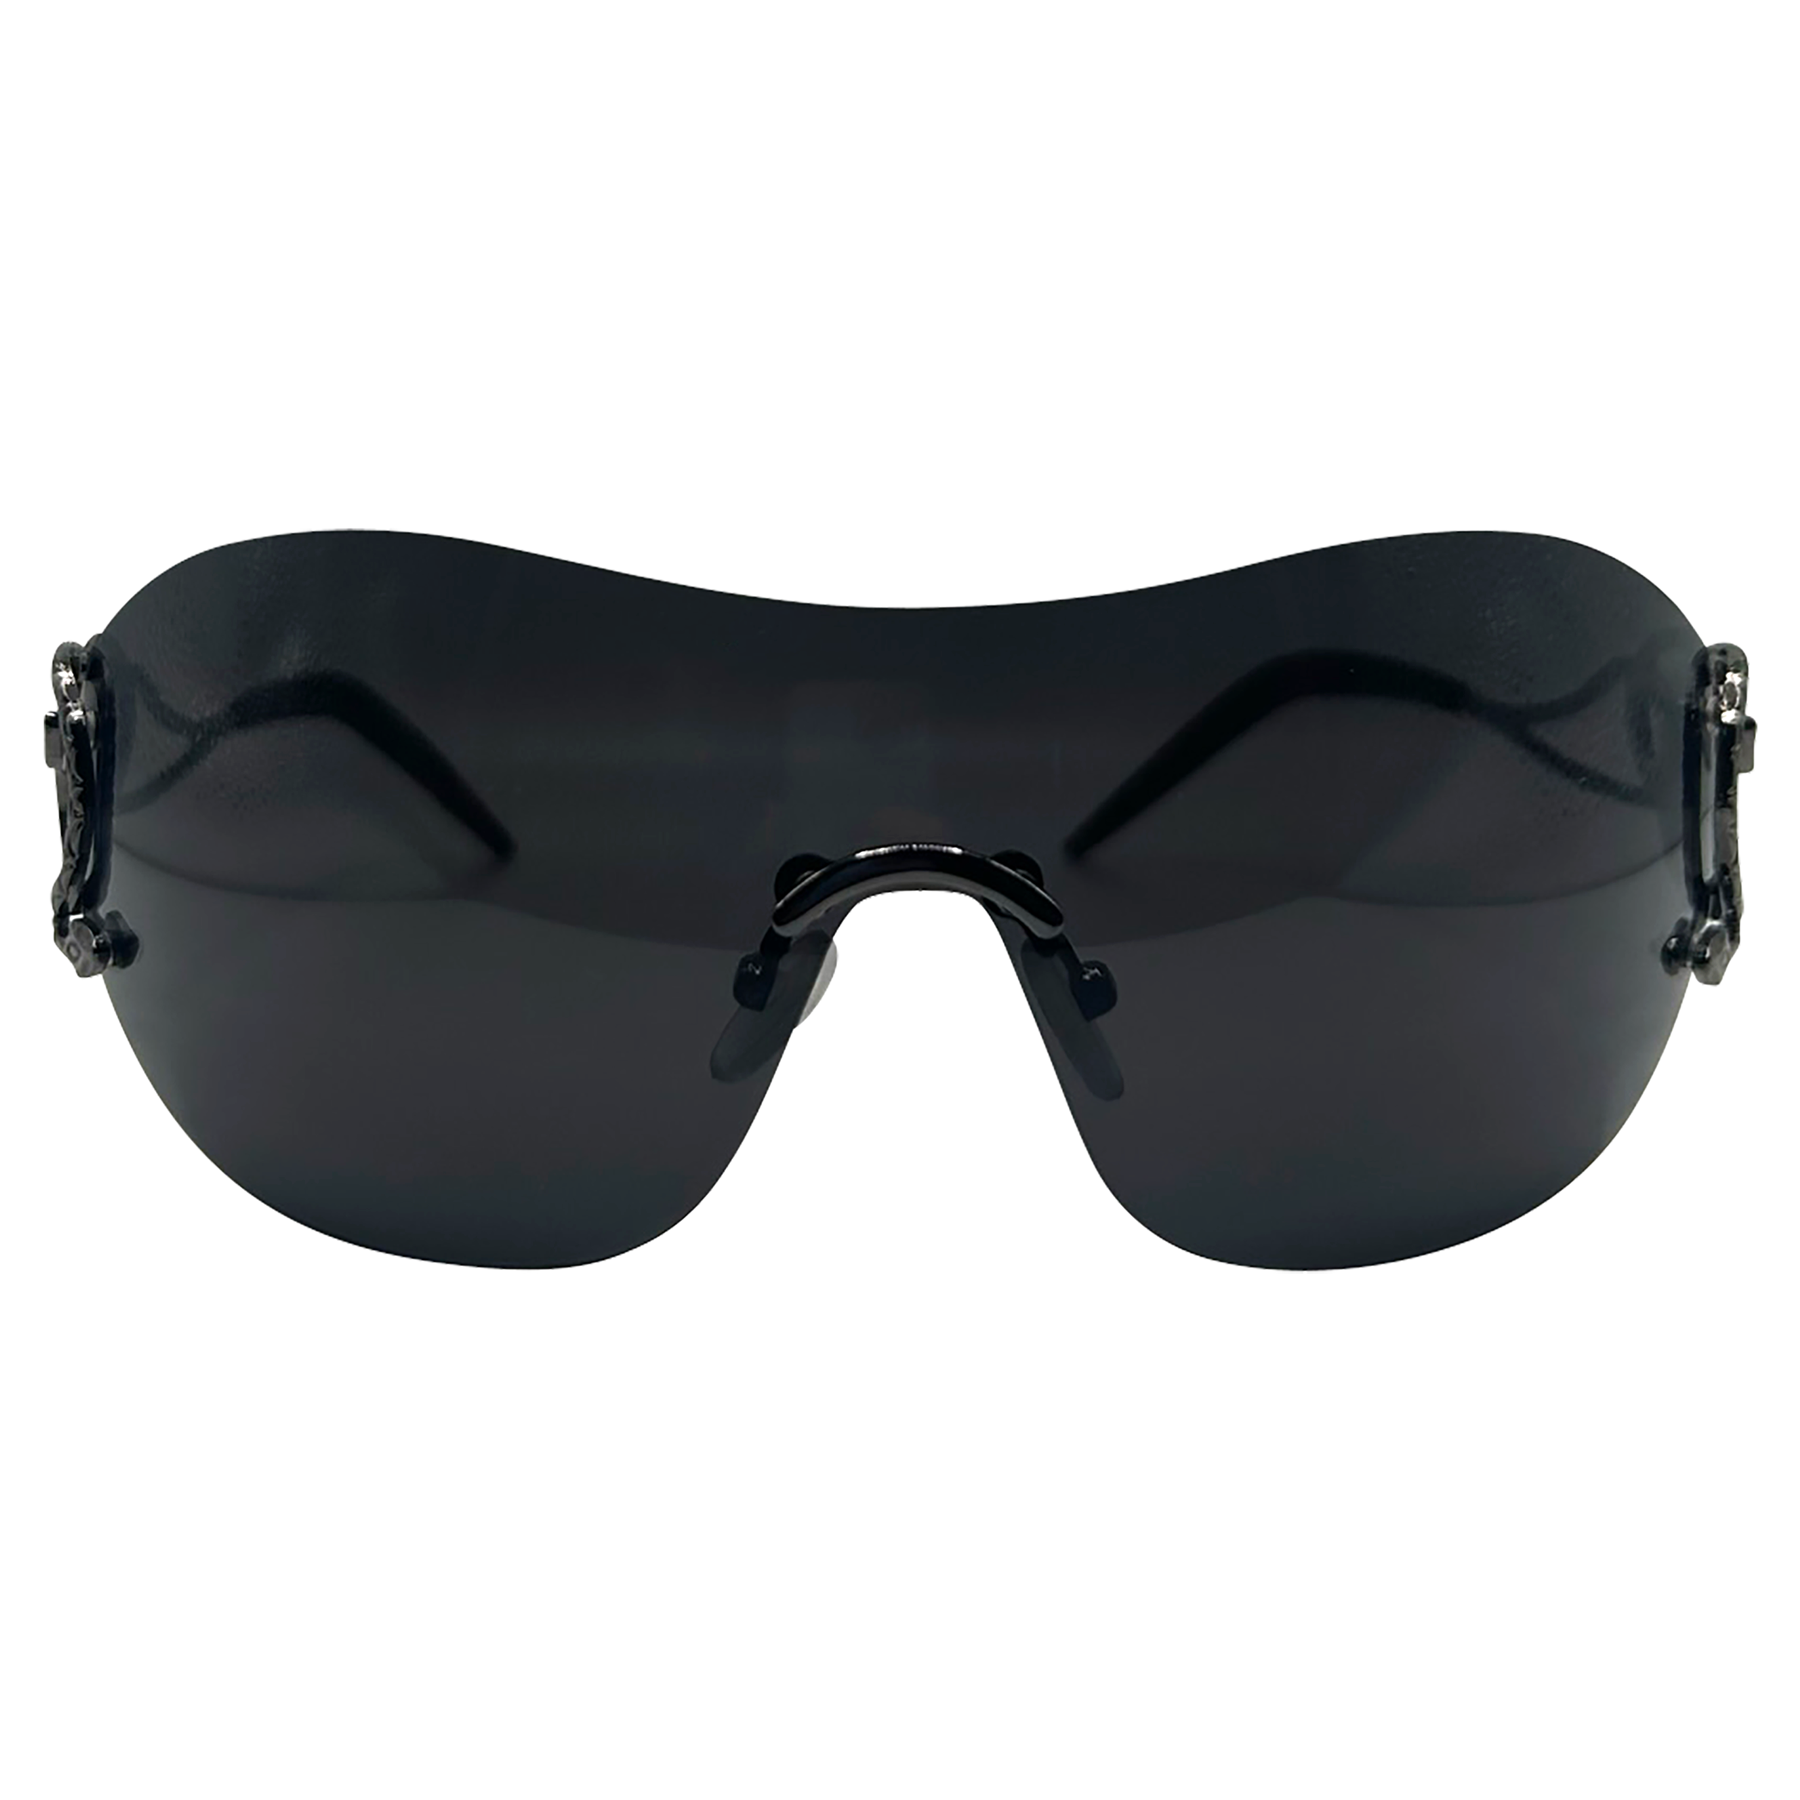 SNAKEY SNAKE Super Dark Rimless Shield Sunglasses